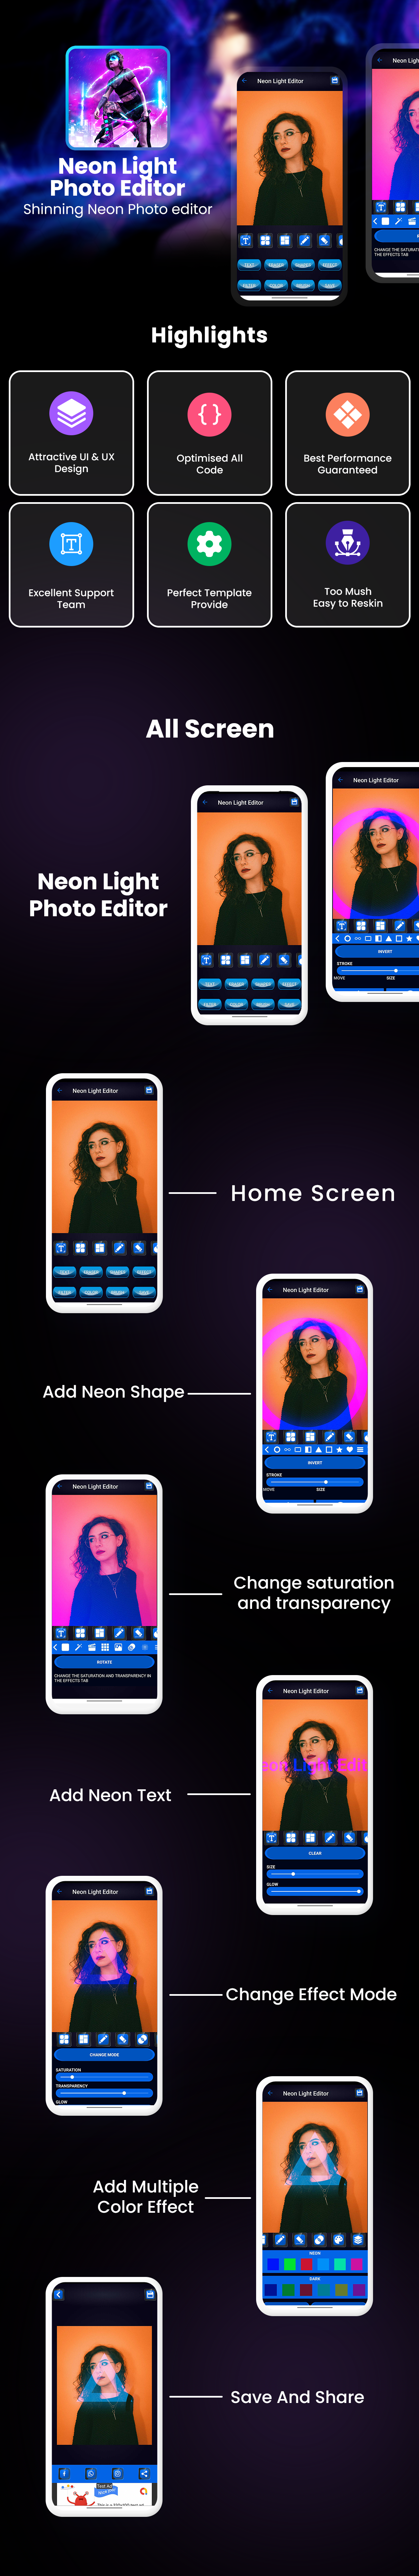 Neon Light Photo Editor | Shinning Neon Photo editor  | Android App | Admob Ads - 1